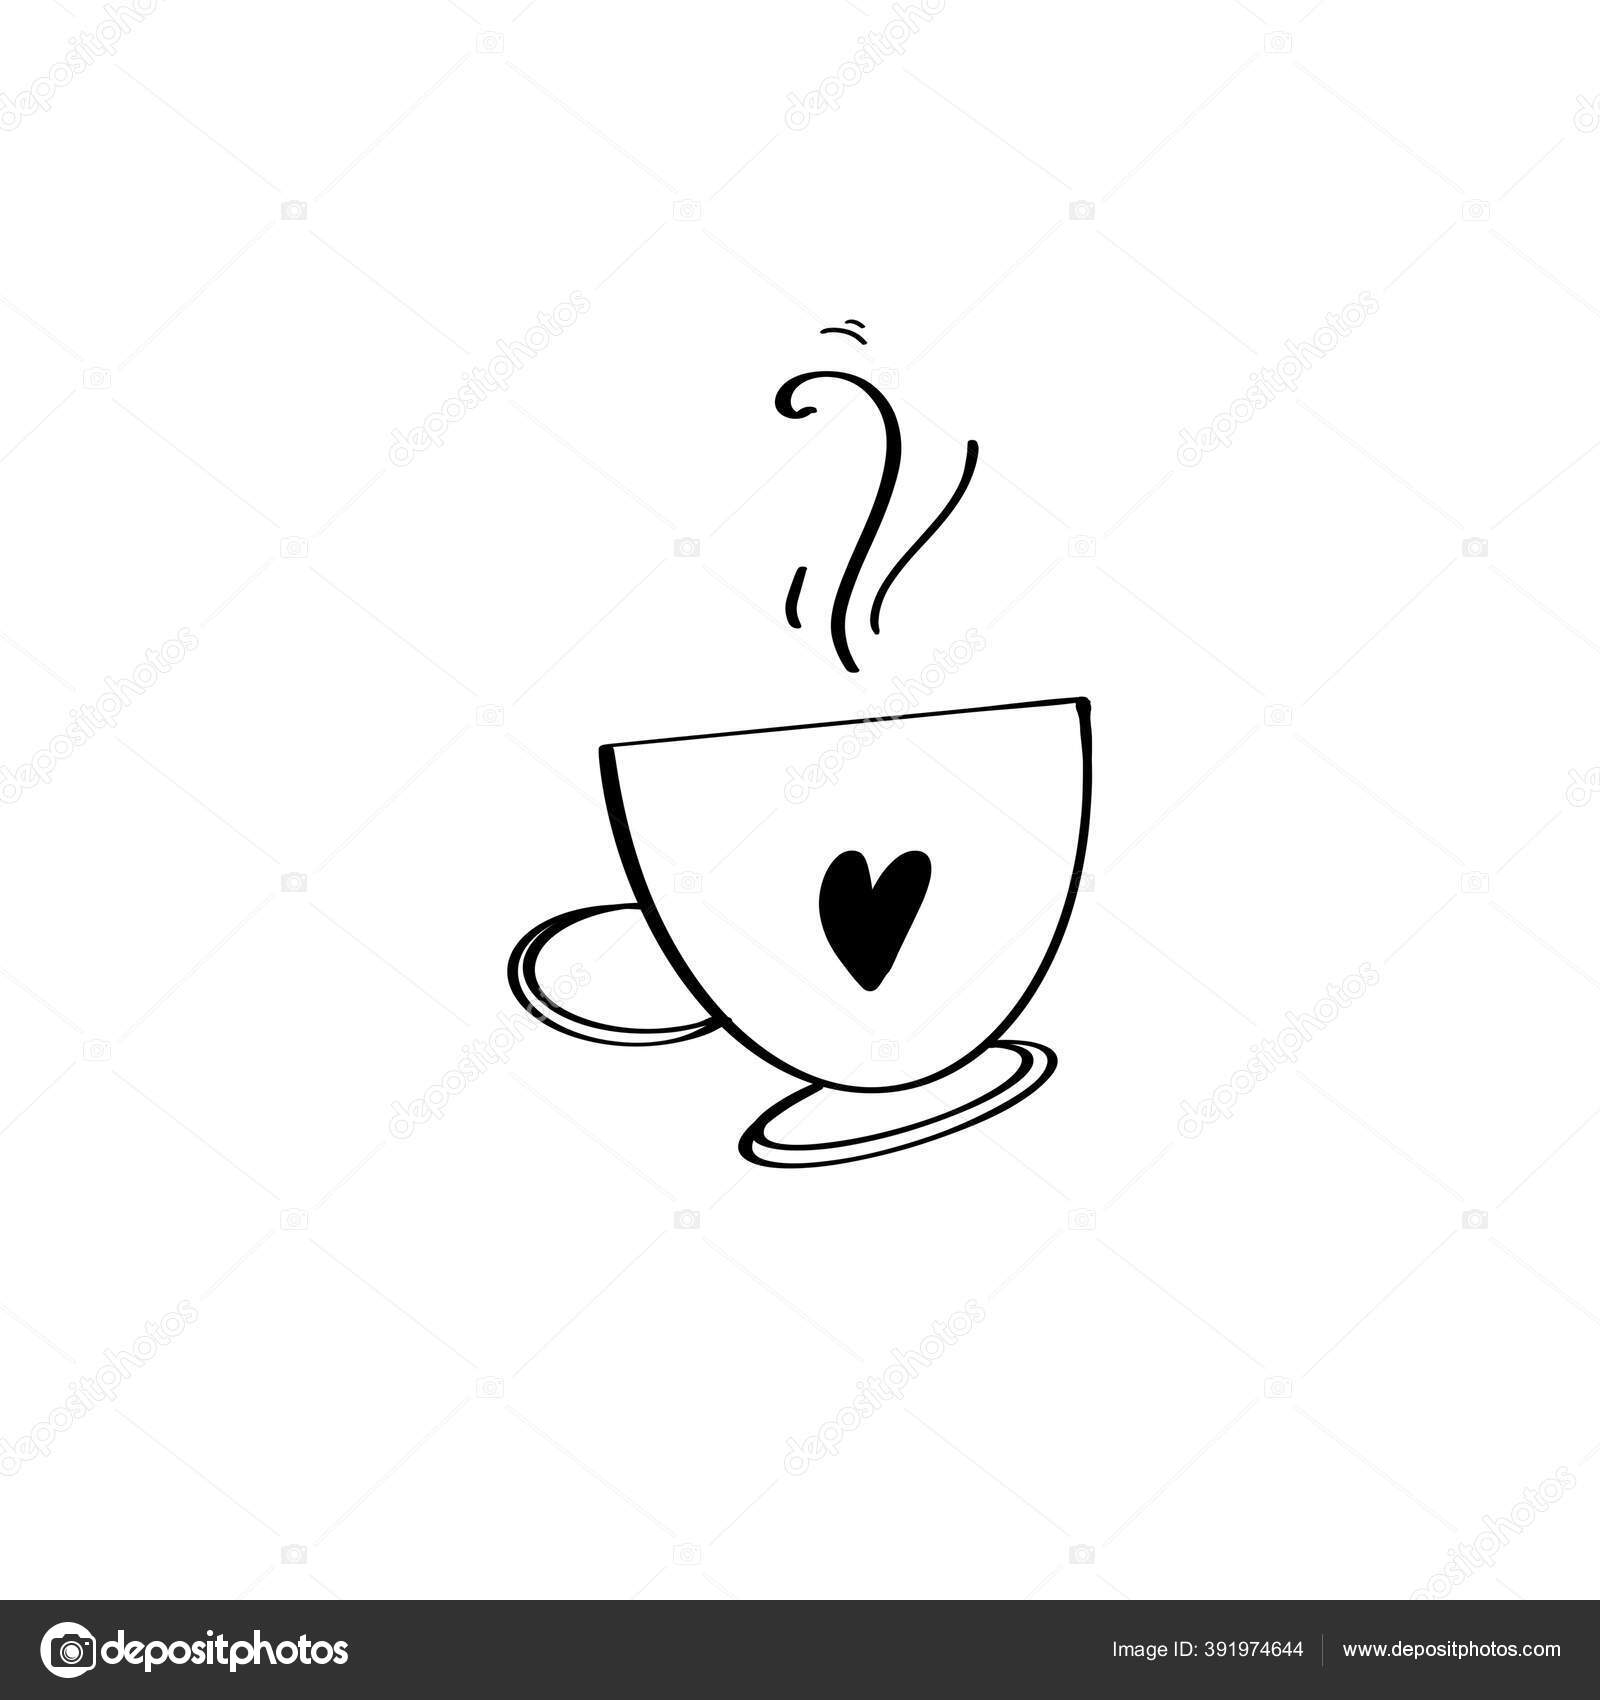 Kawaii Coffee Cup Art Print